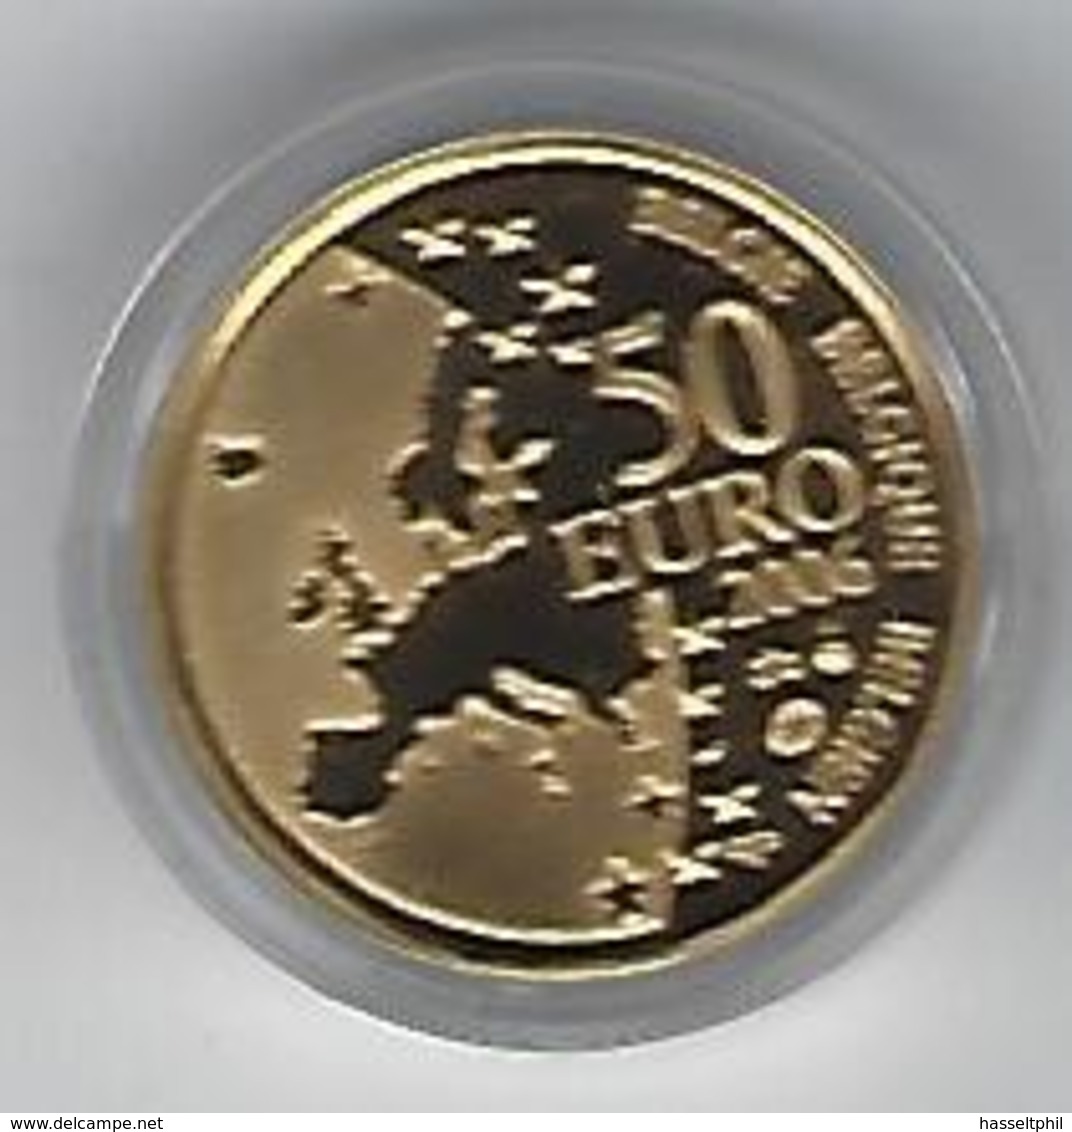 BELGIE - BELGIQUE Justus Lipsius - 2006 - 50 Euro Gold In Box With Certificate - België